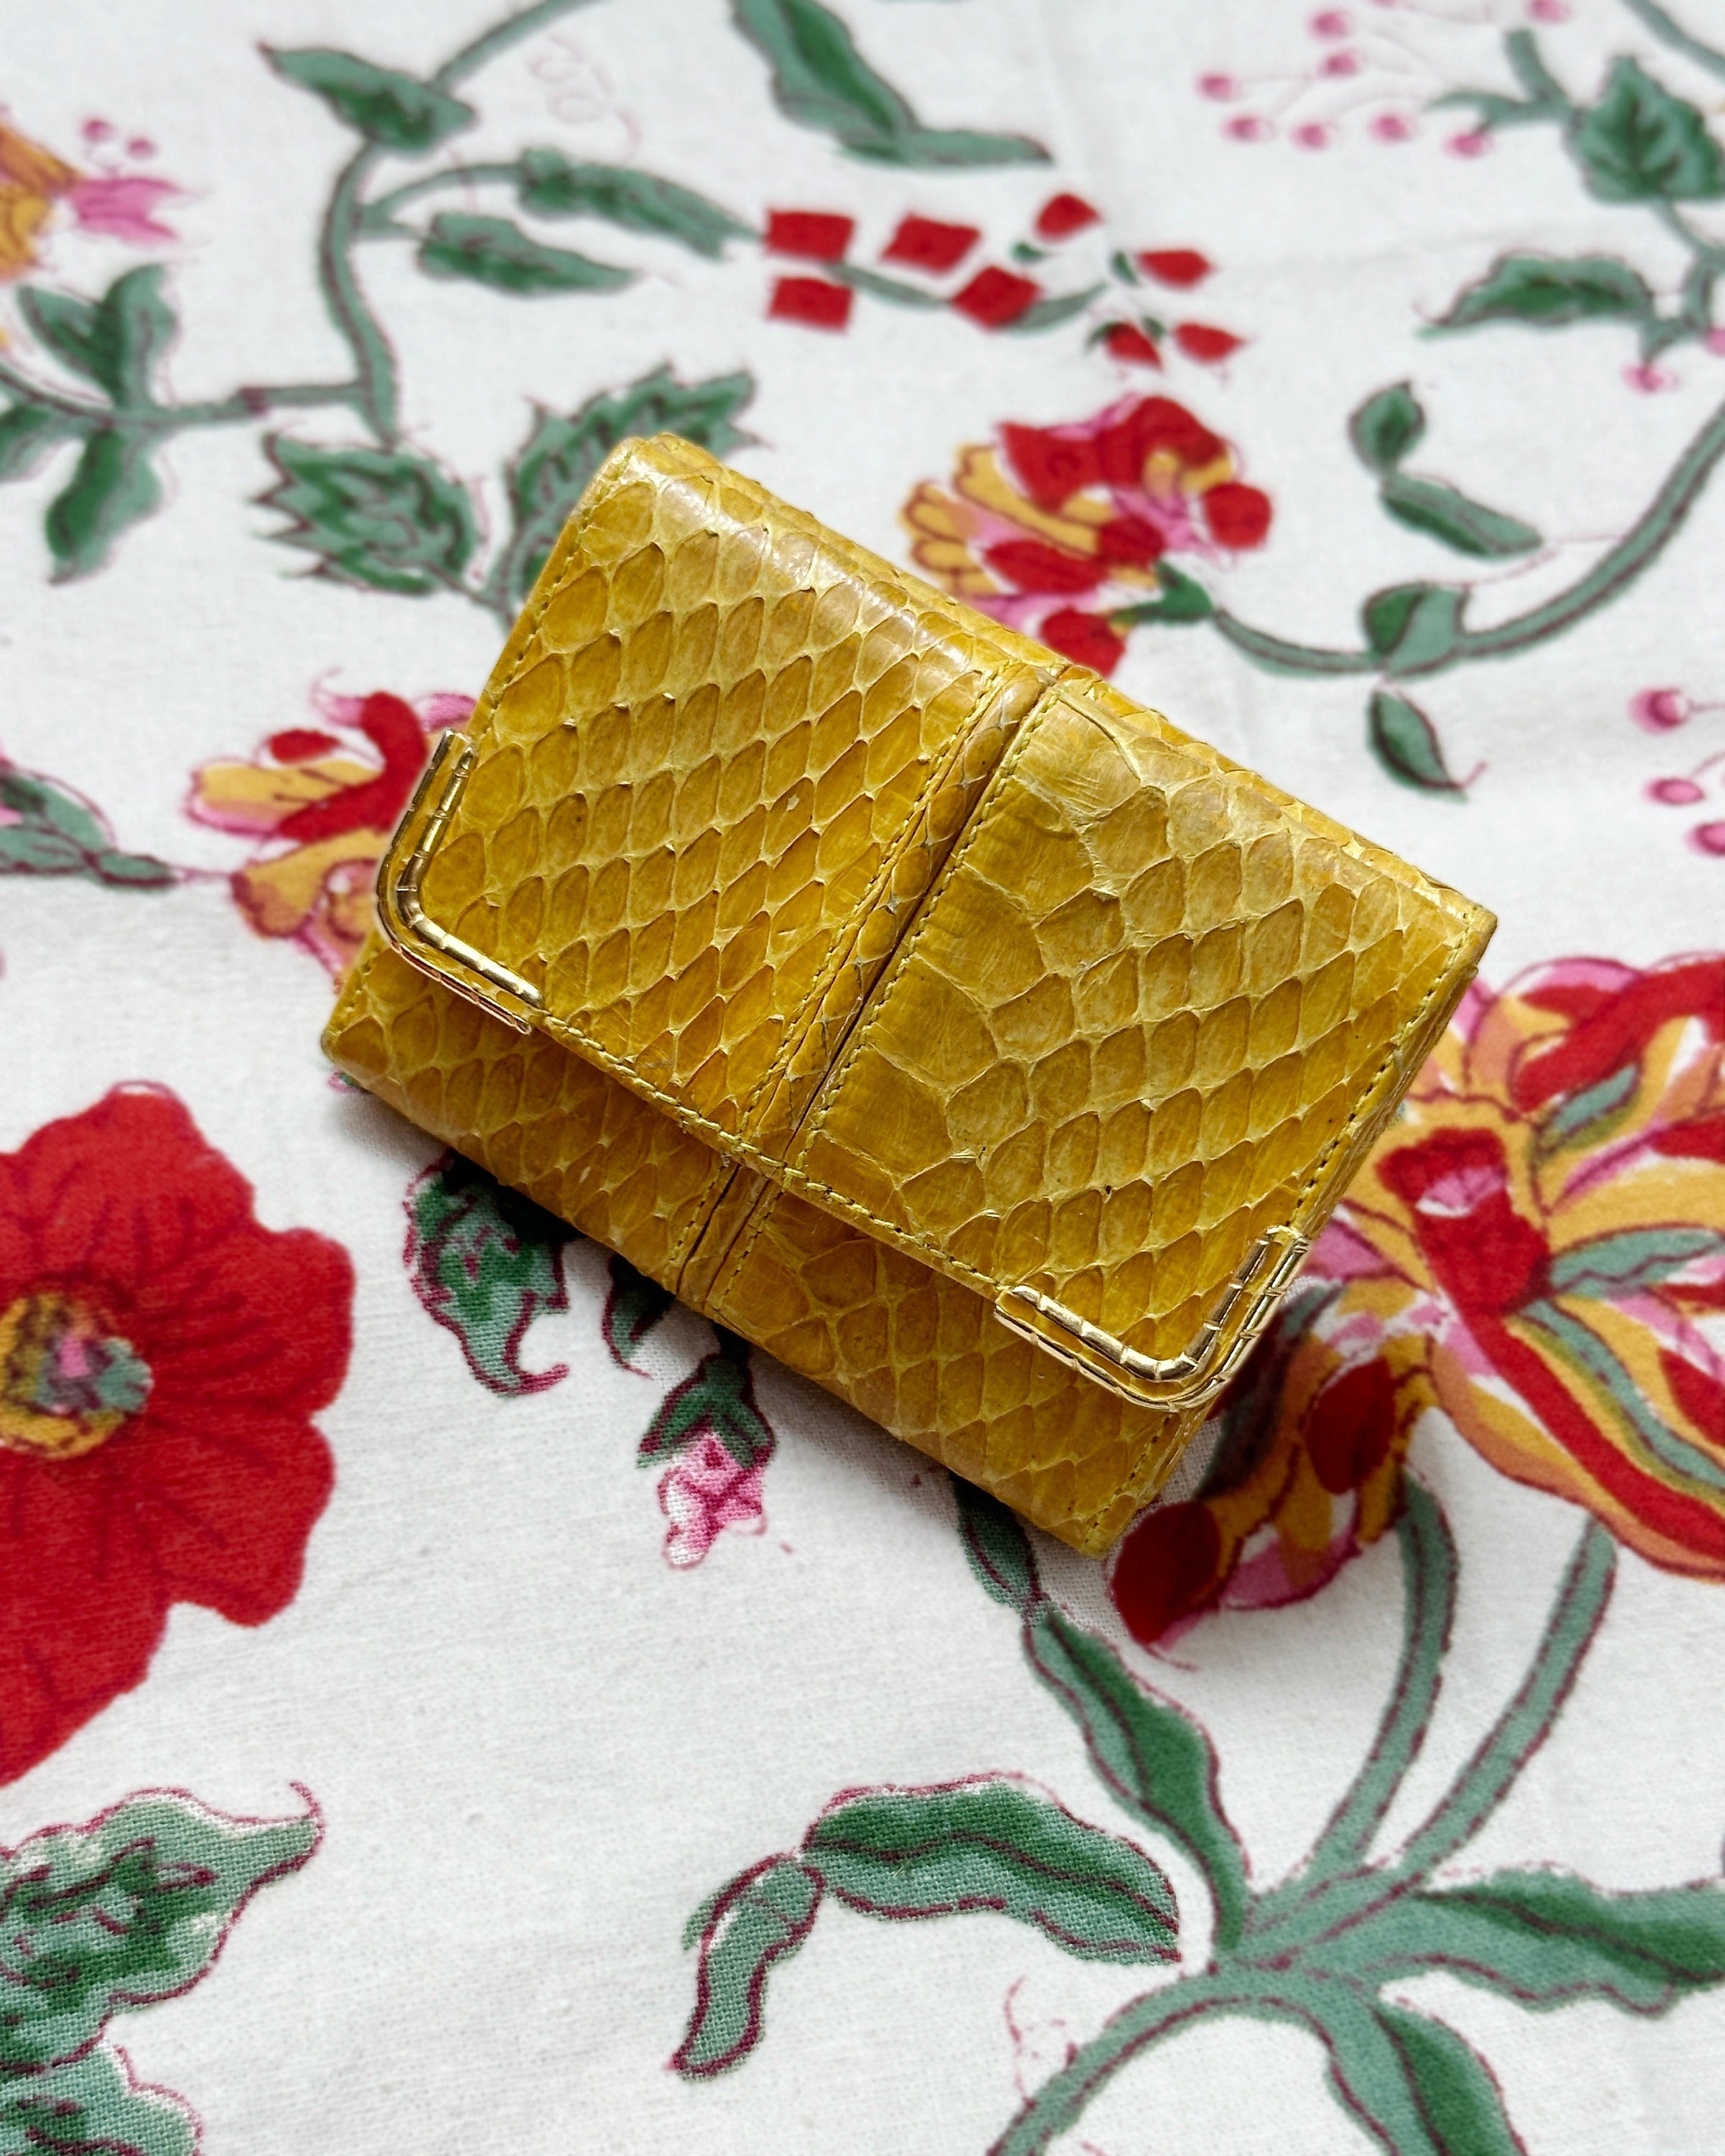 Authentic Chanel Aged Creasing Lambskin Yen Wallet in Mustard Yellow